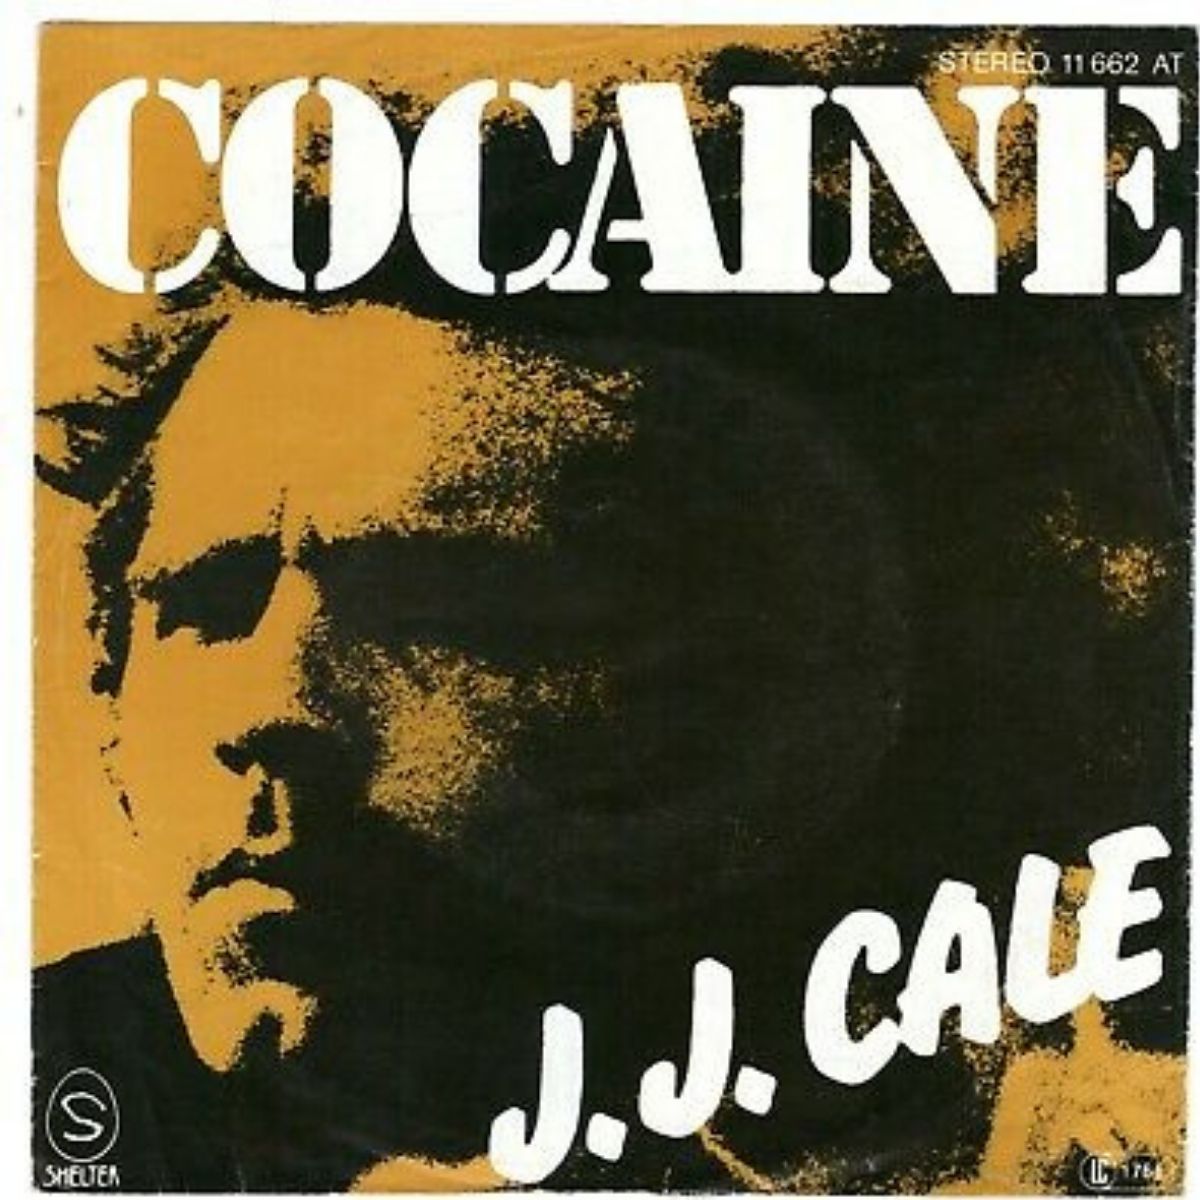 Обложка песни «Кокаин» («Cocaine») Джей Джей Кейла (J.J. Cale)